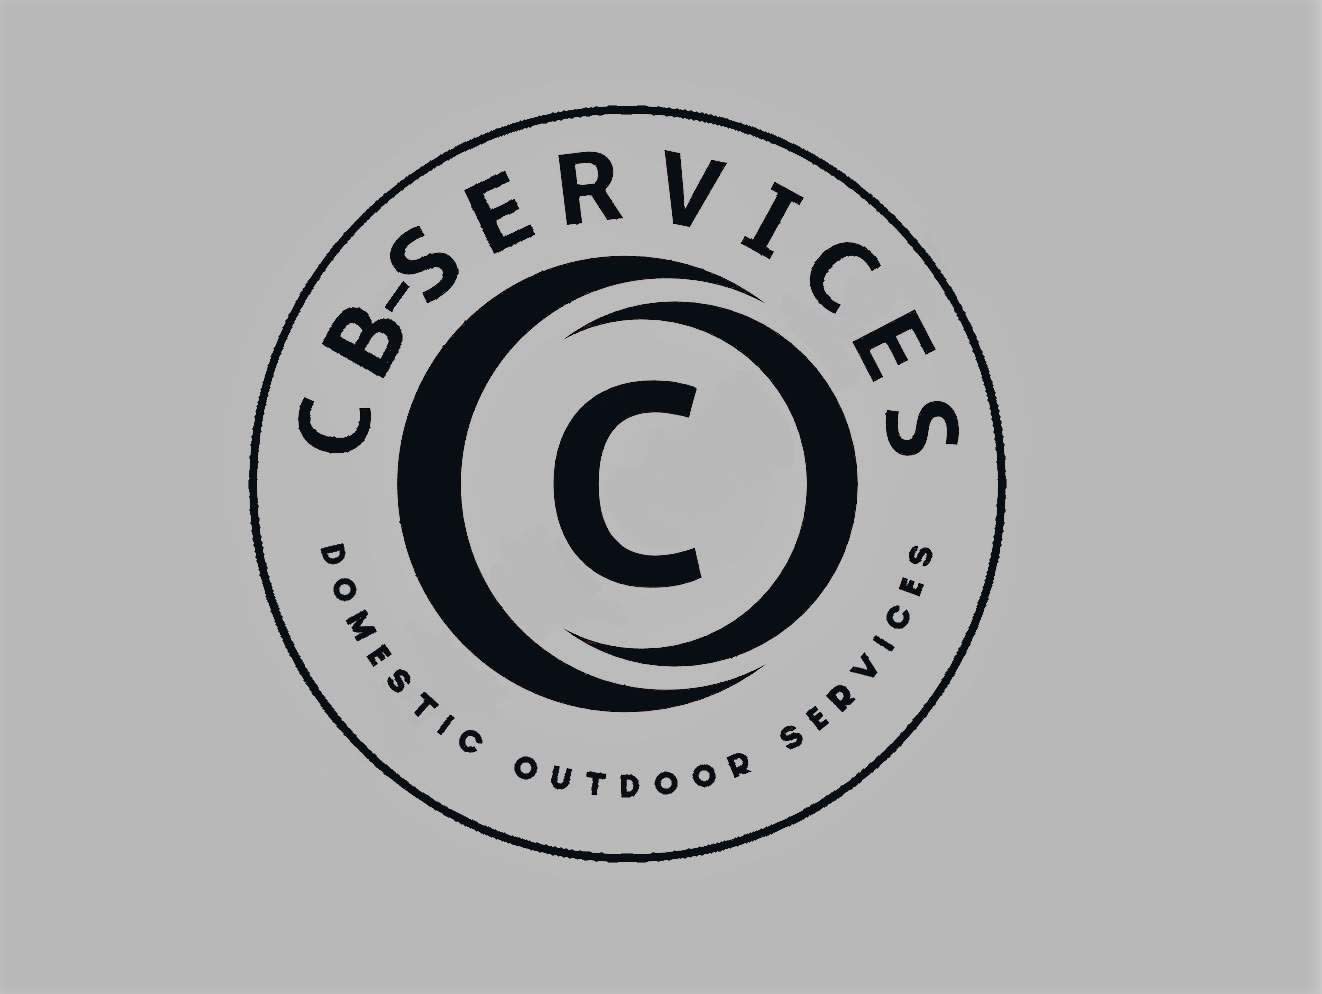 Images CB Services